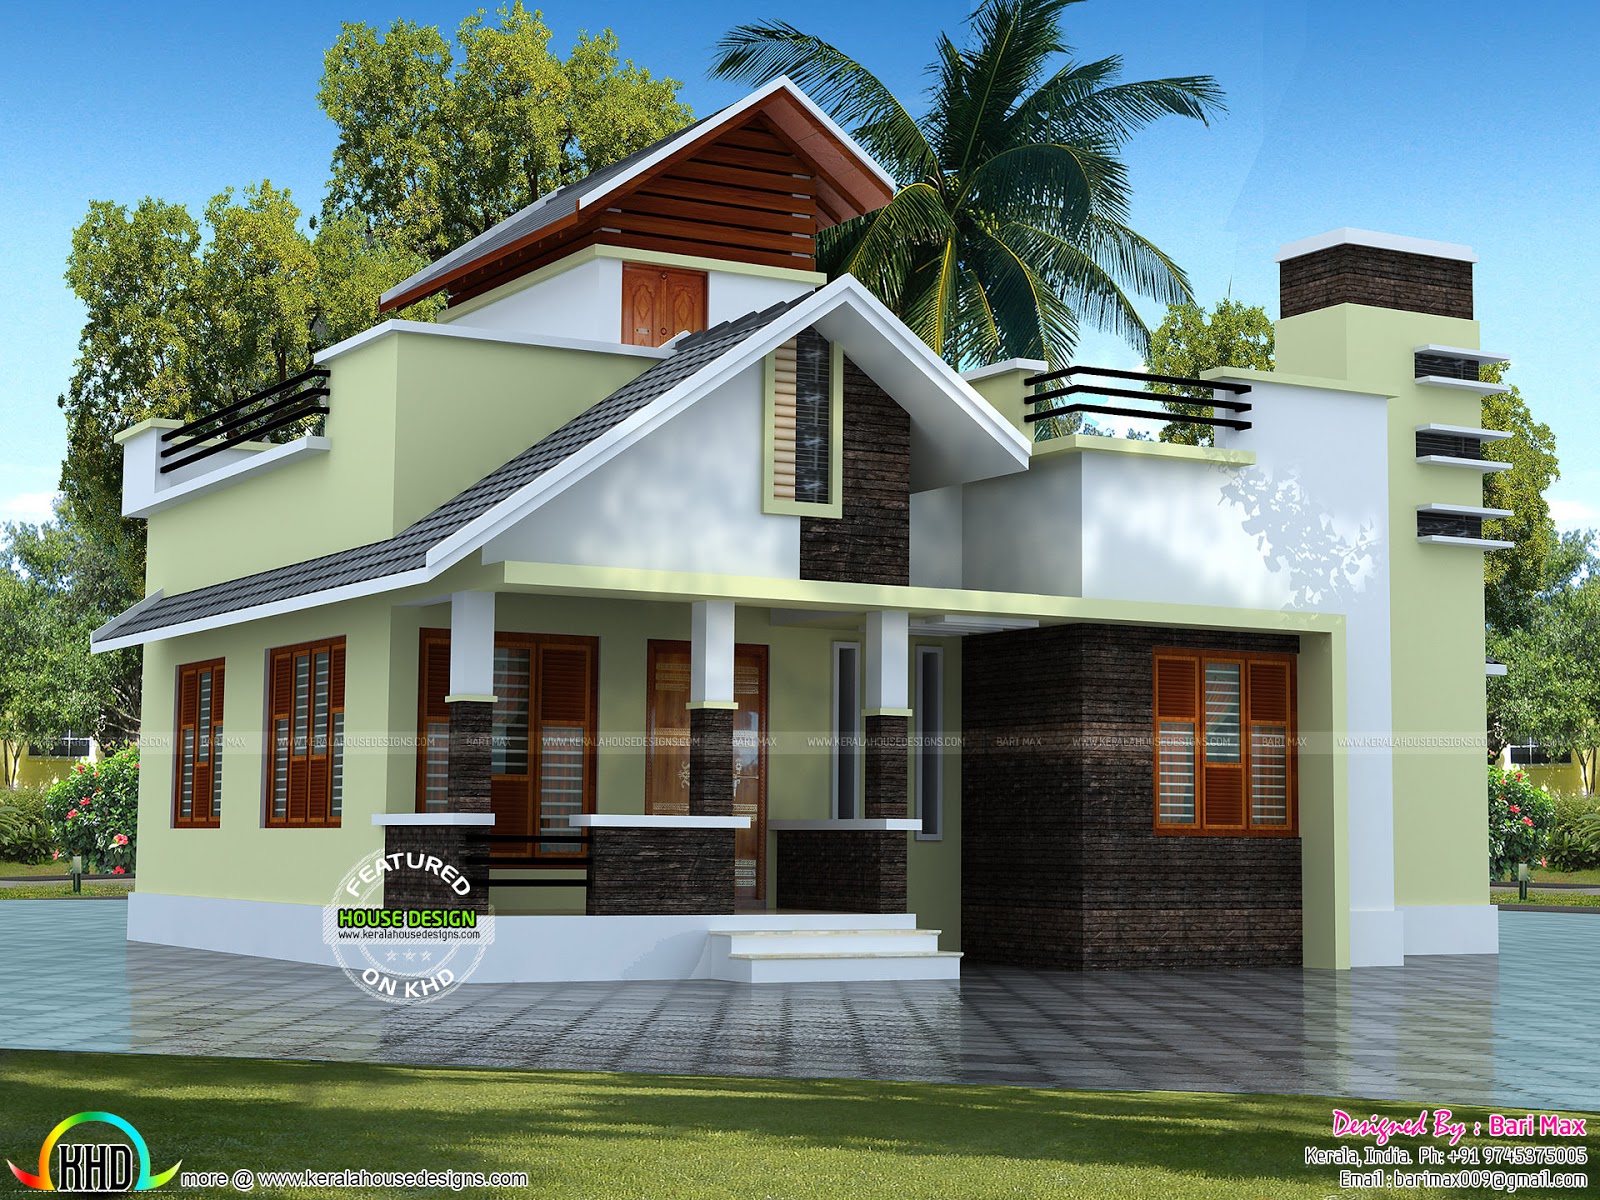  Low  cost  single floor home  1050 sq ft Kerala  home  design 